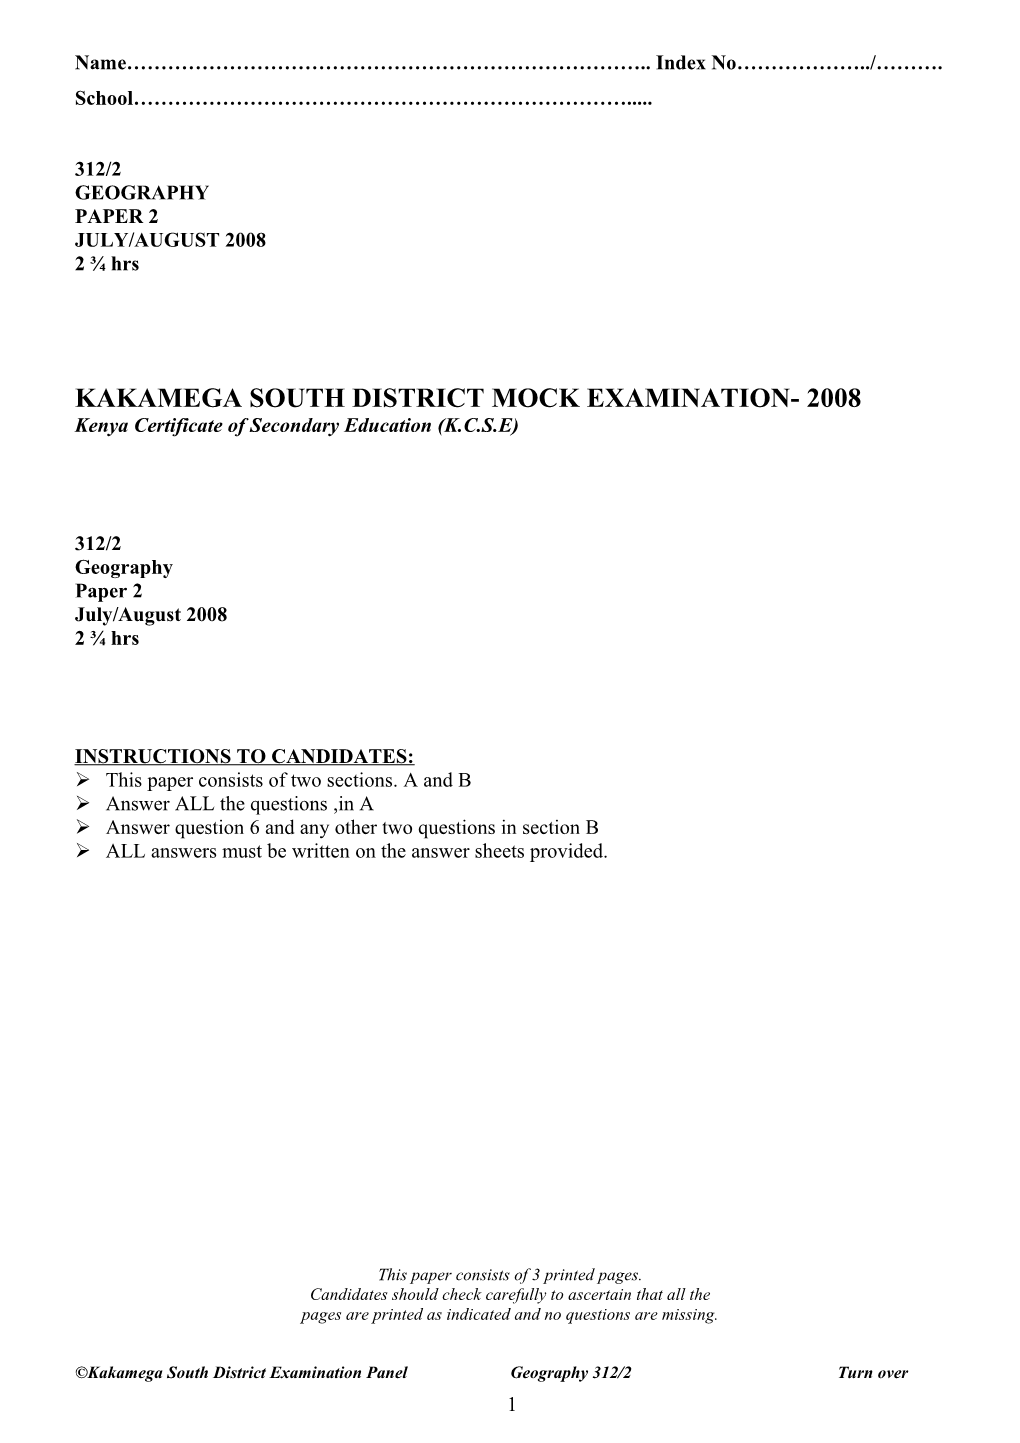 Kakamega South District Mock Examination- 2008